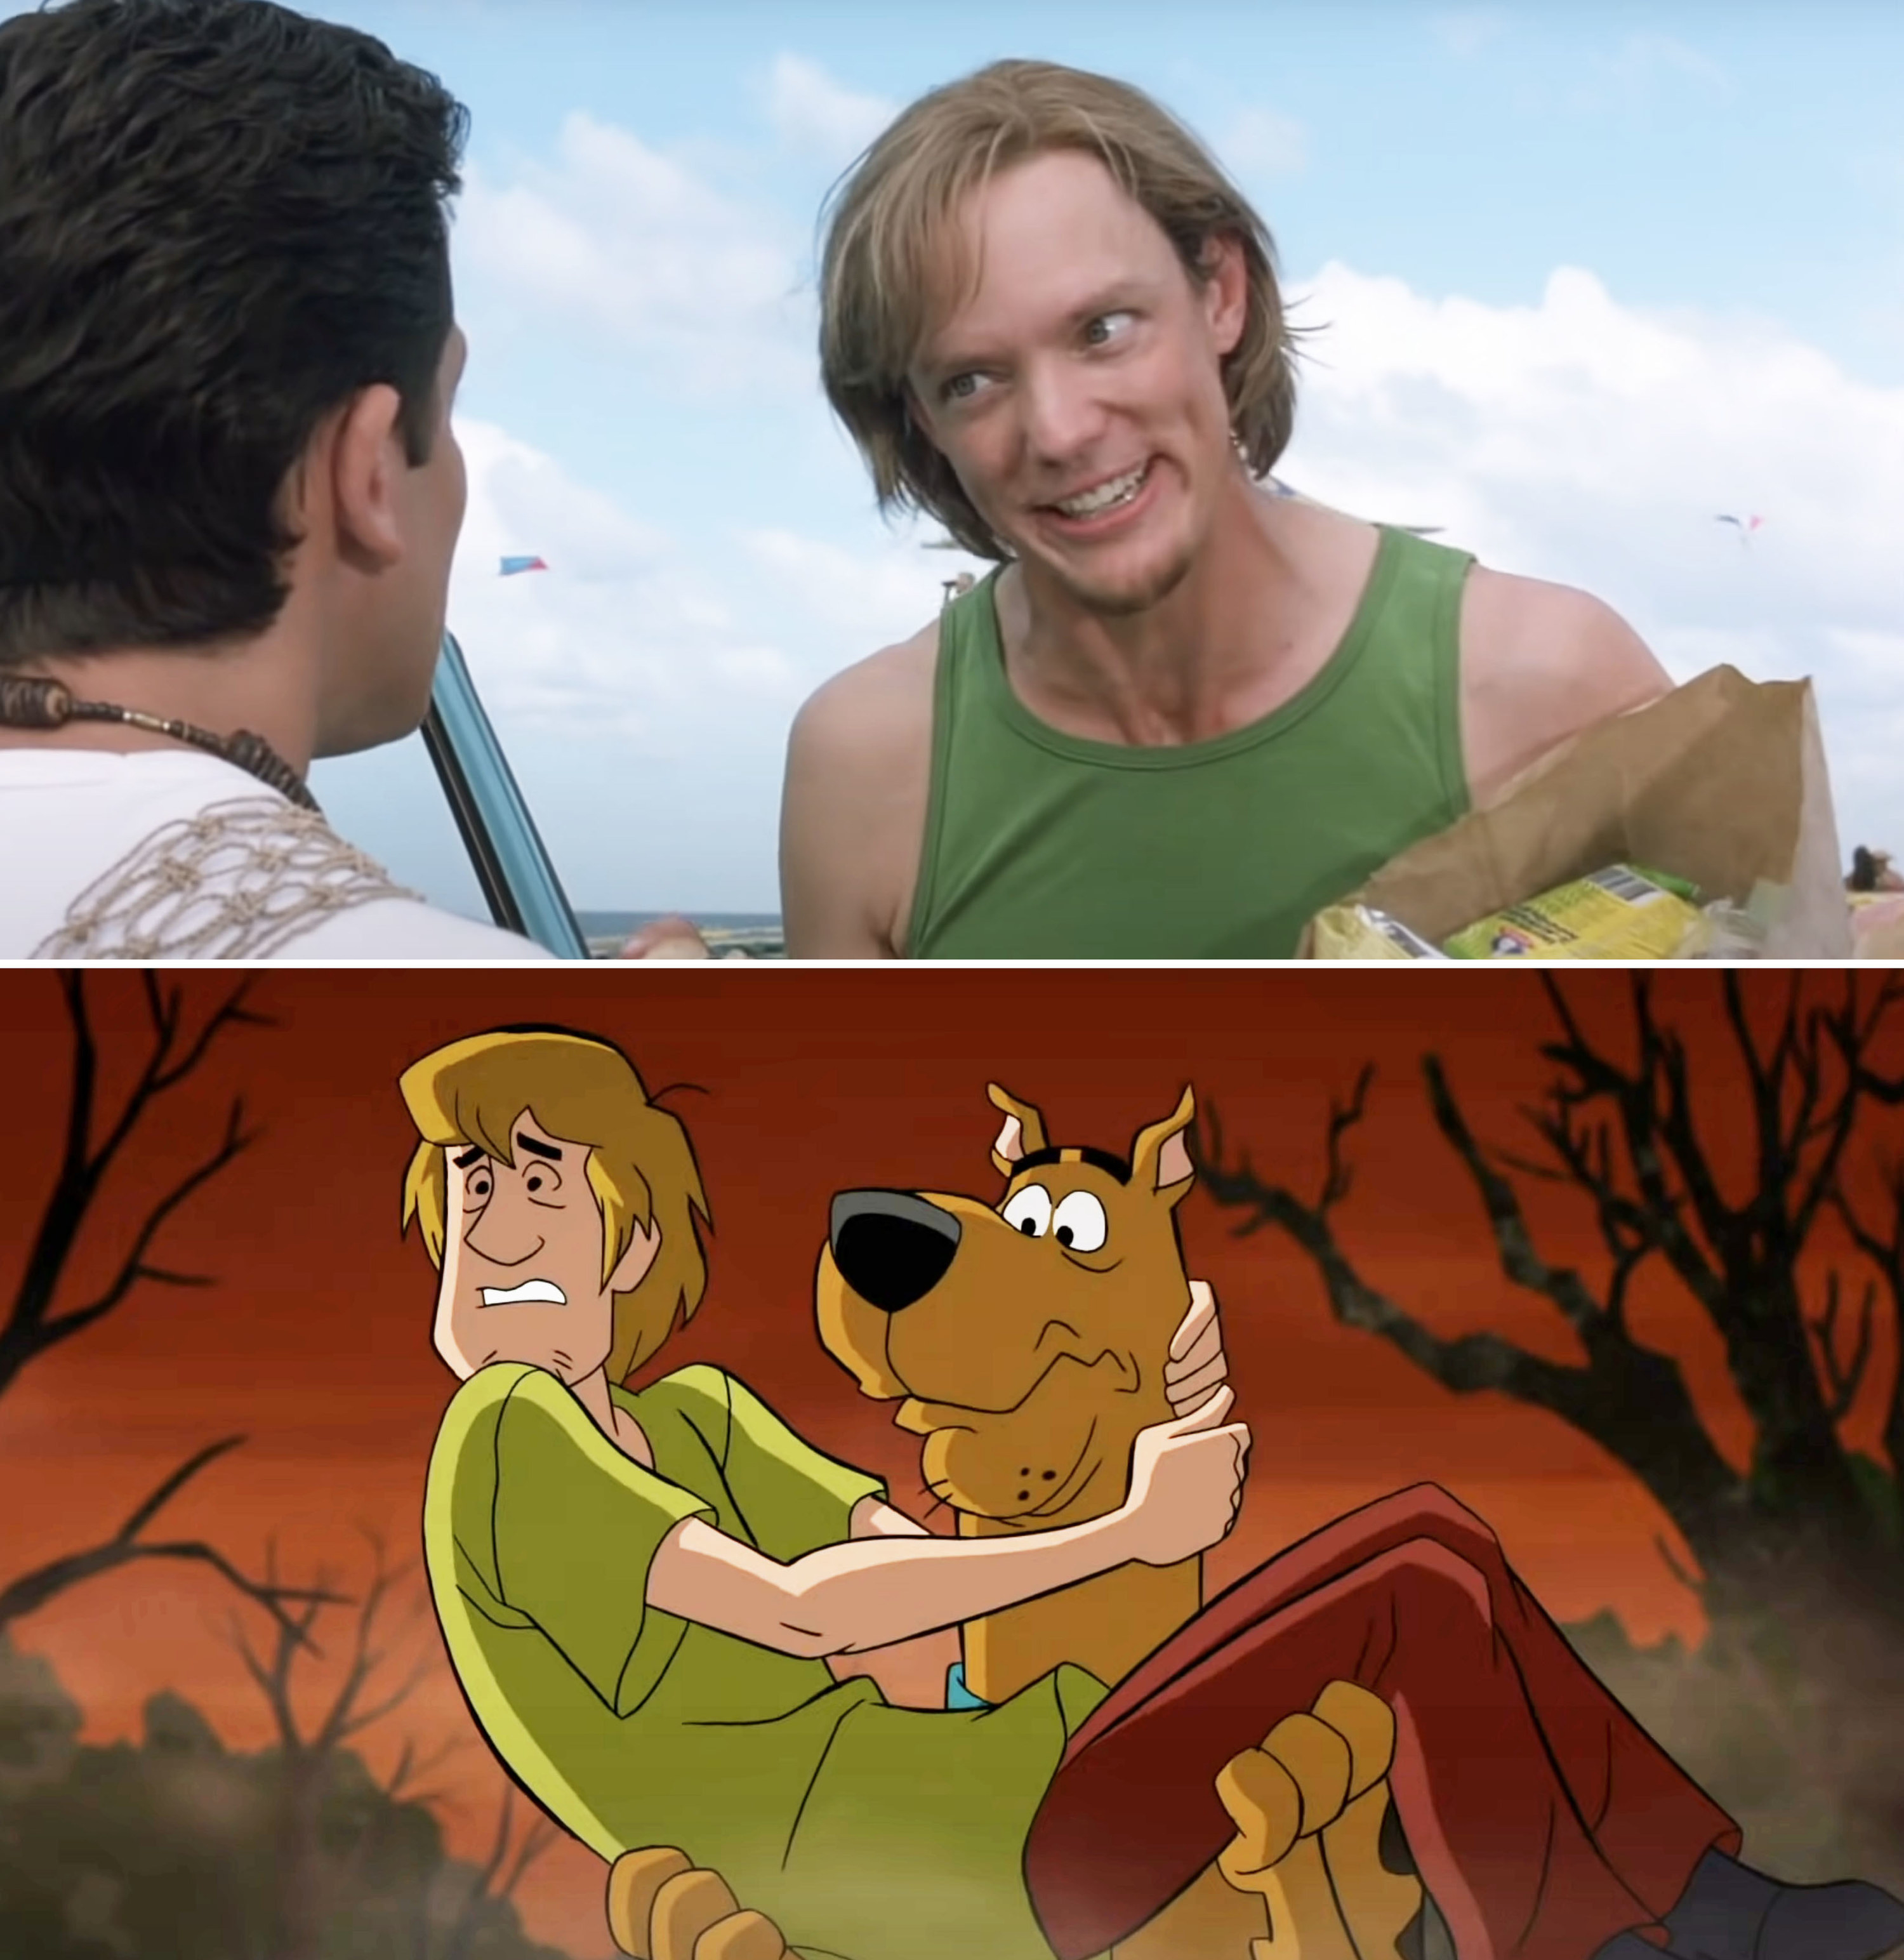 Screen grabs from &quot;Scooby-Doo&quot;